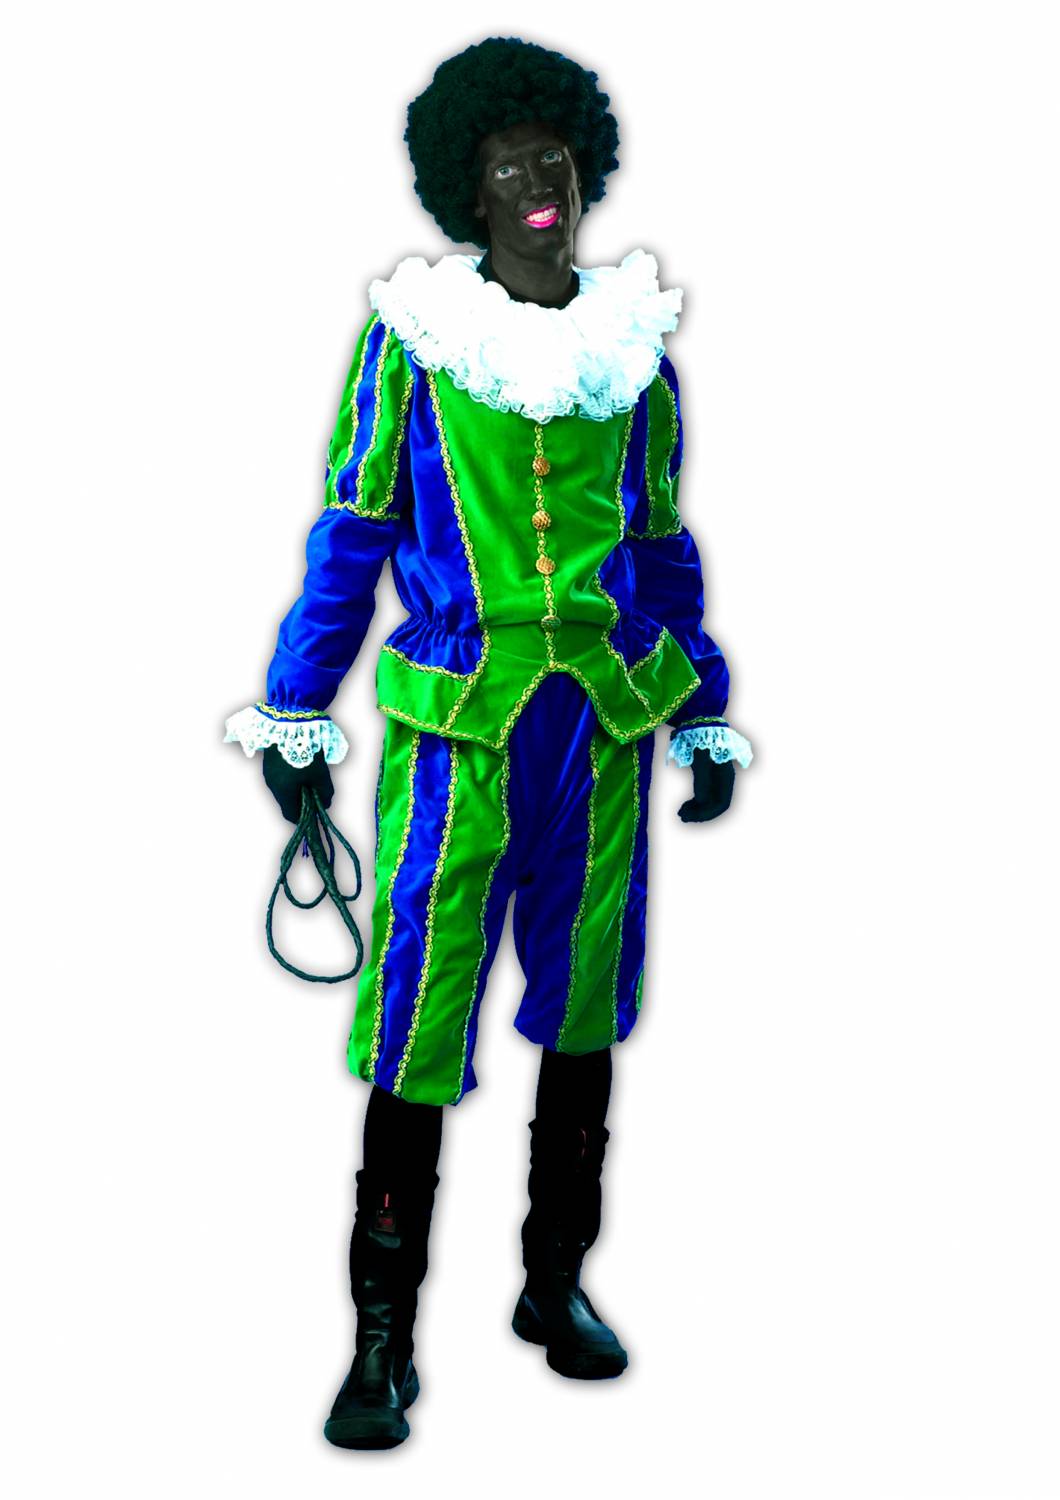 Winderig Verandert in String string Zwarte Piet-kostuums